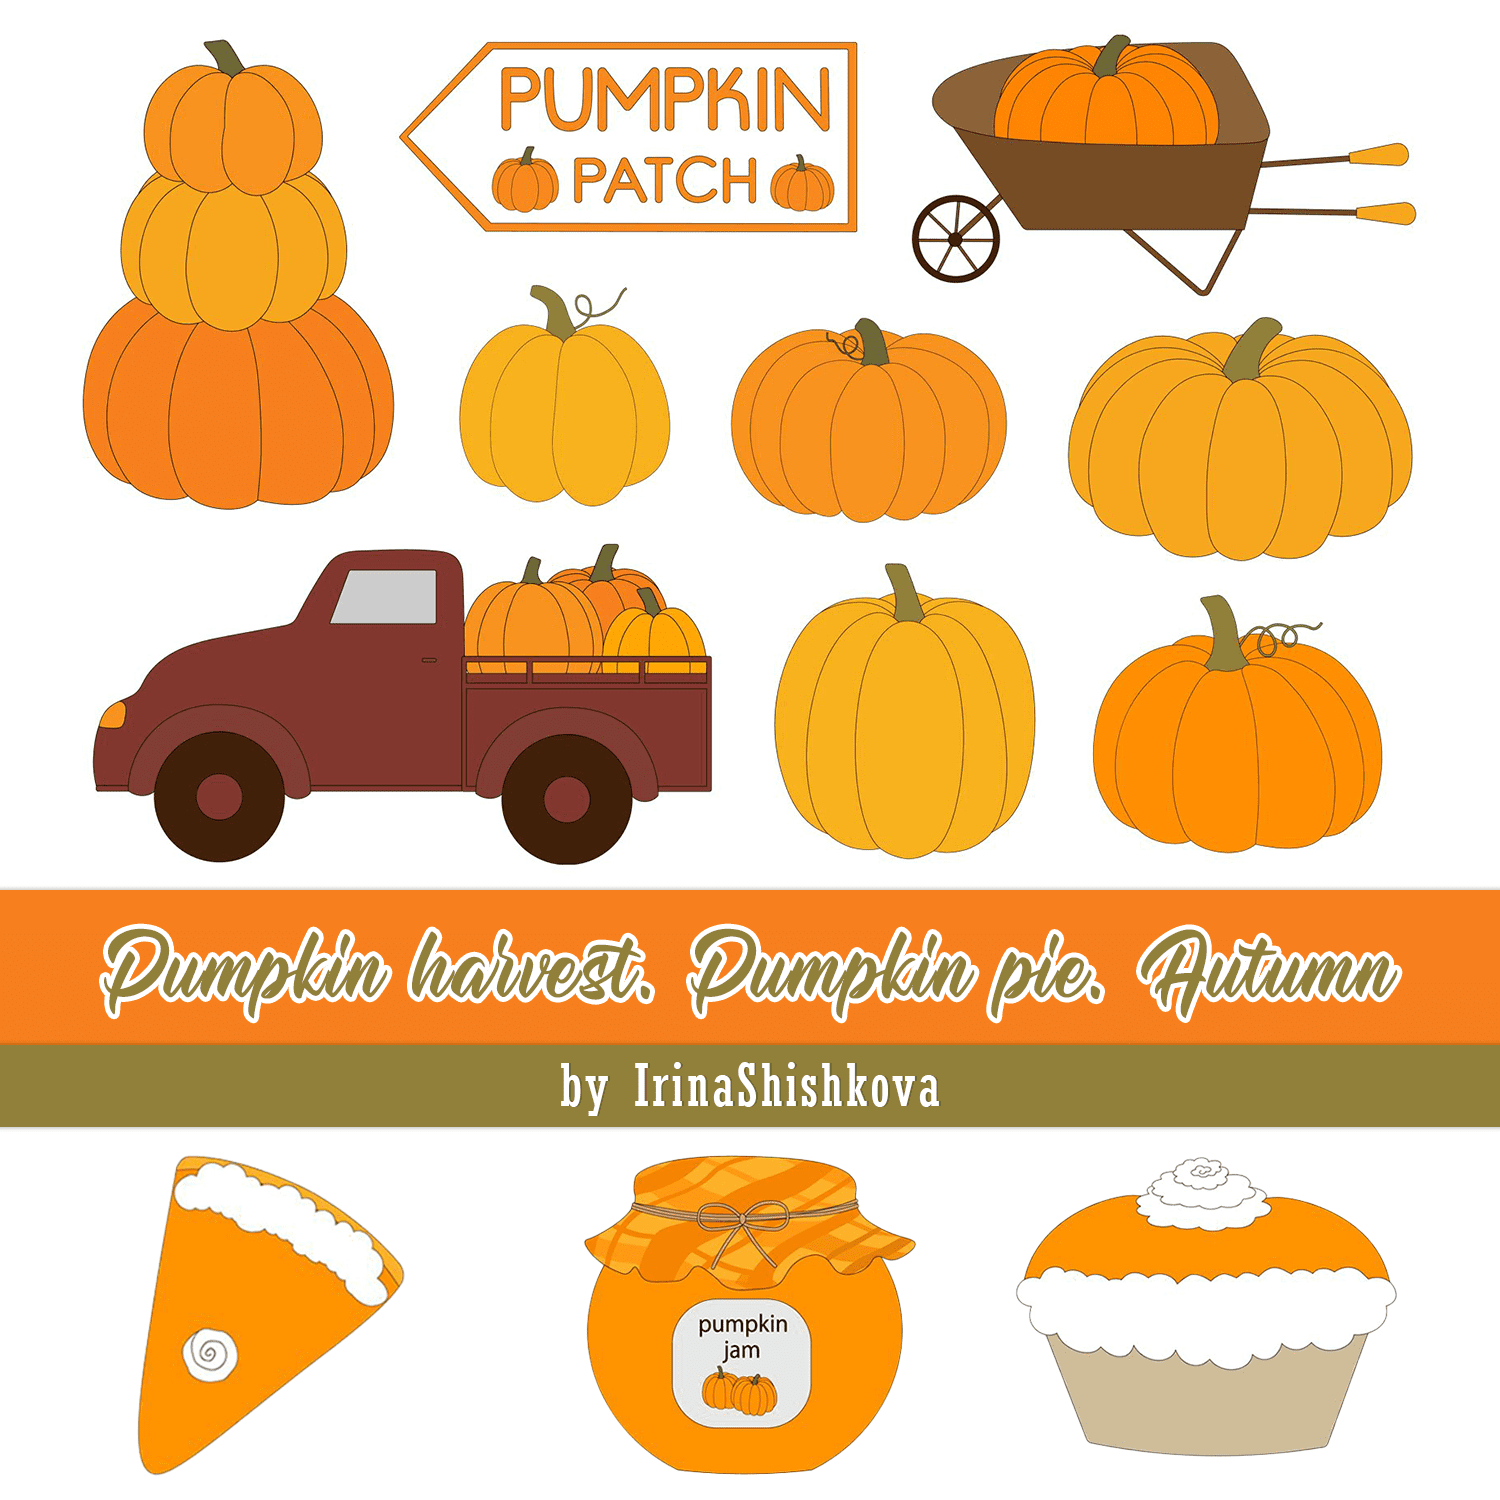 Pumpkin harvest. Pumpkin pie. Autumn cover.